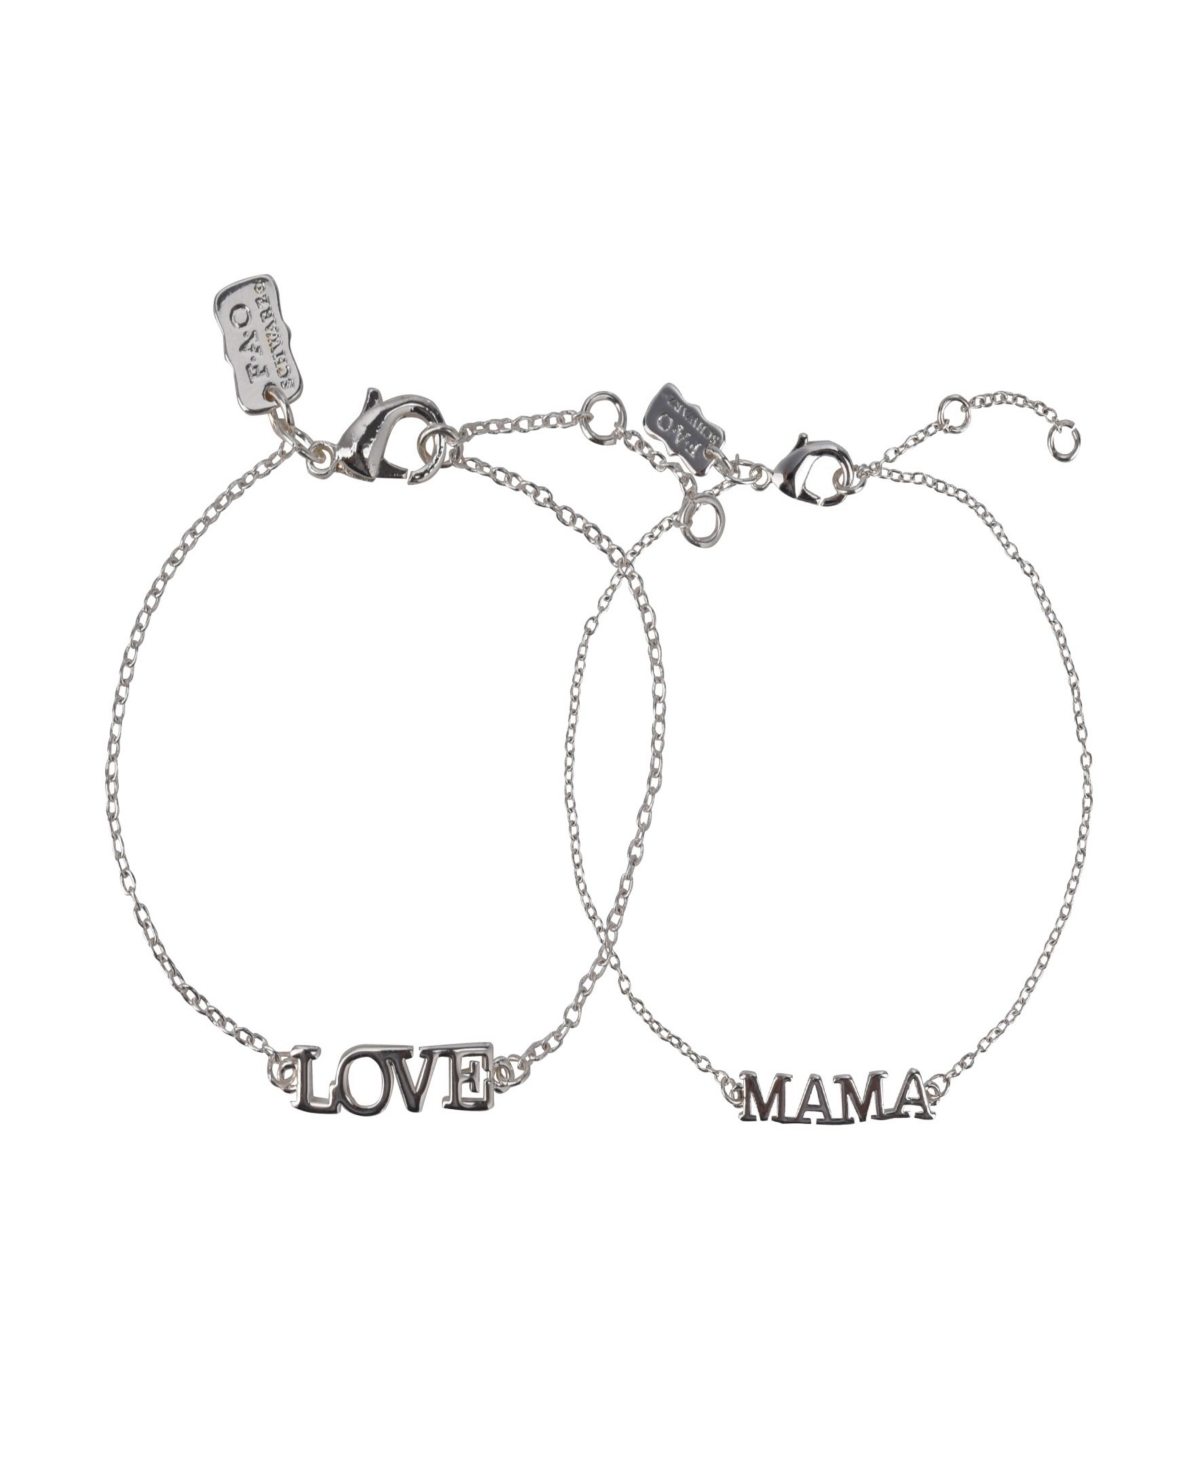 Fao Schwarz Fine Silver Plated Mama and Love Bracelet Set, 2 Piece